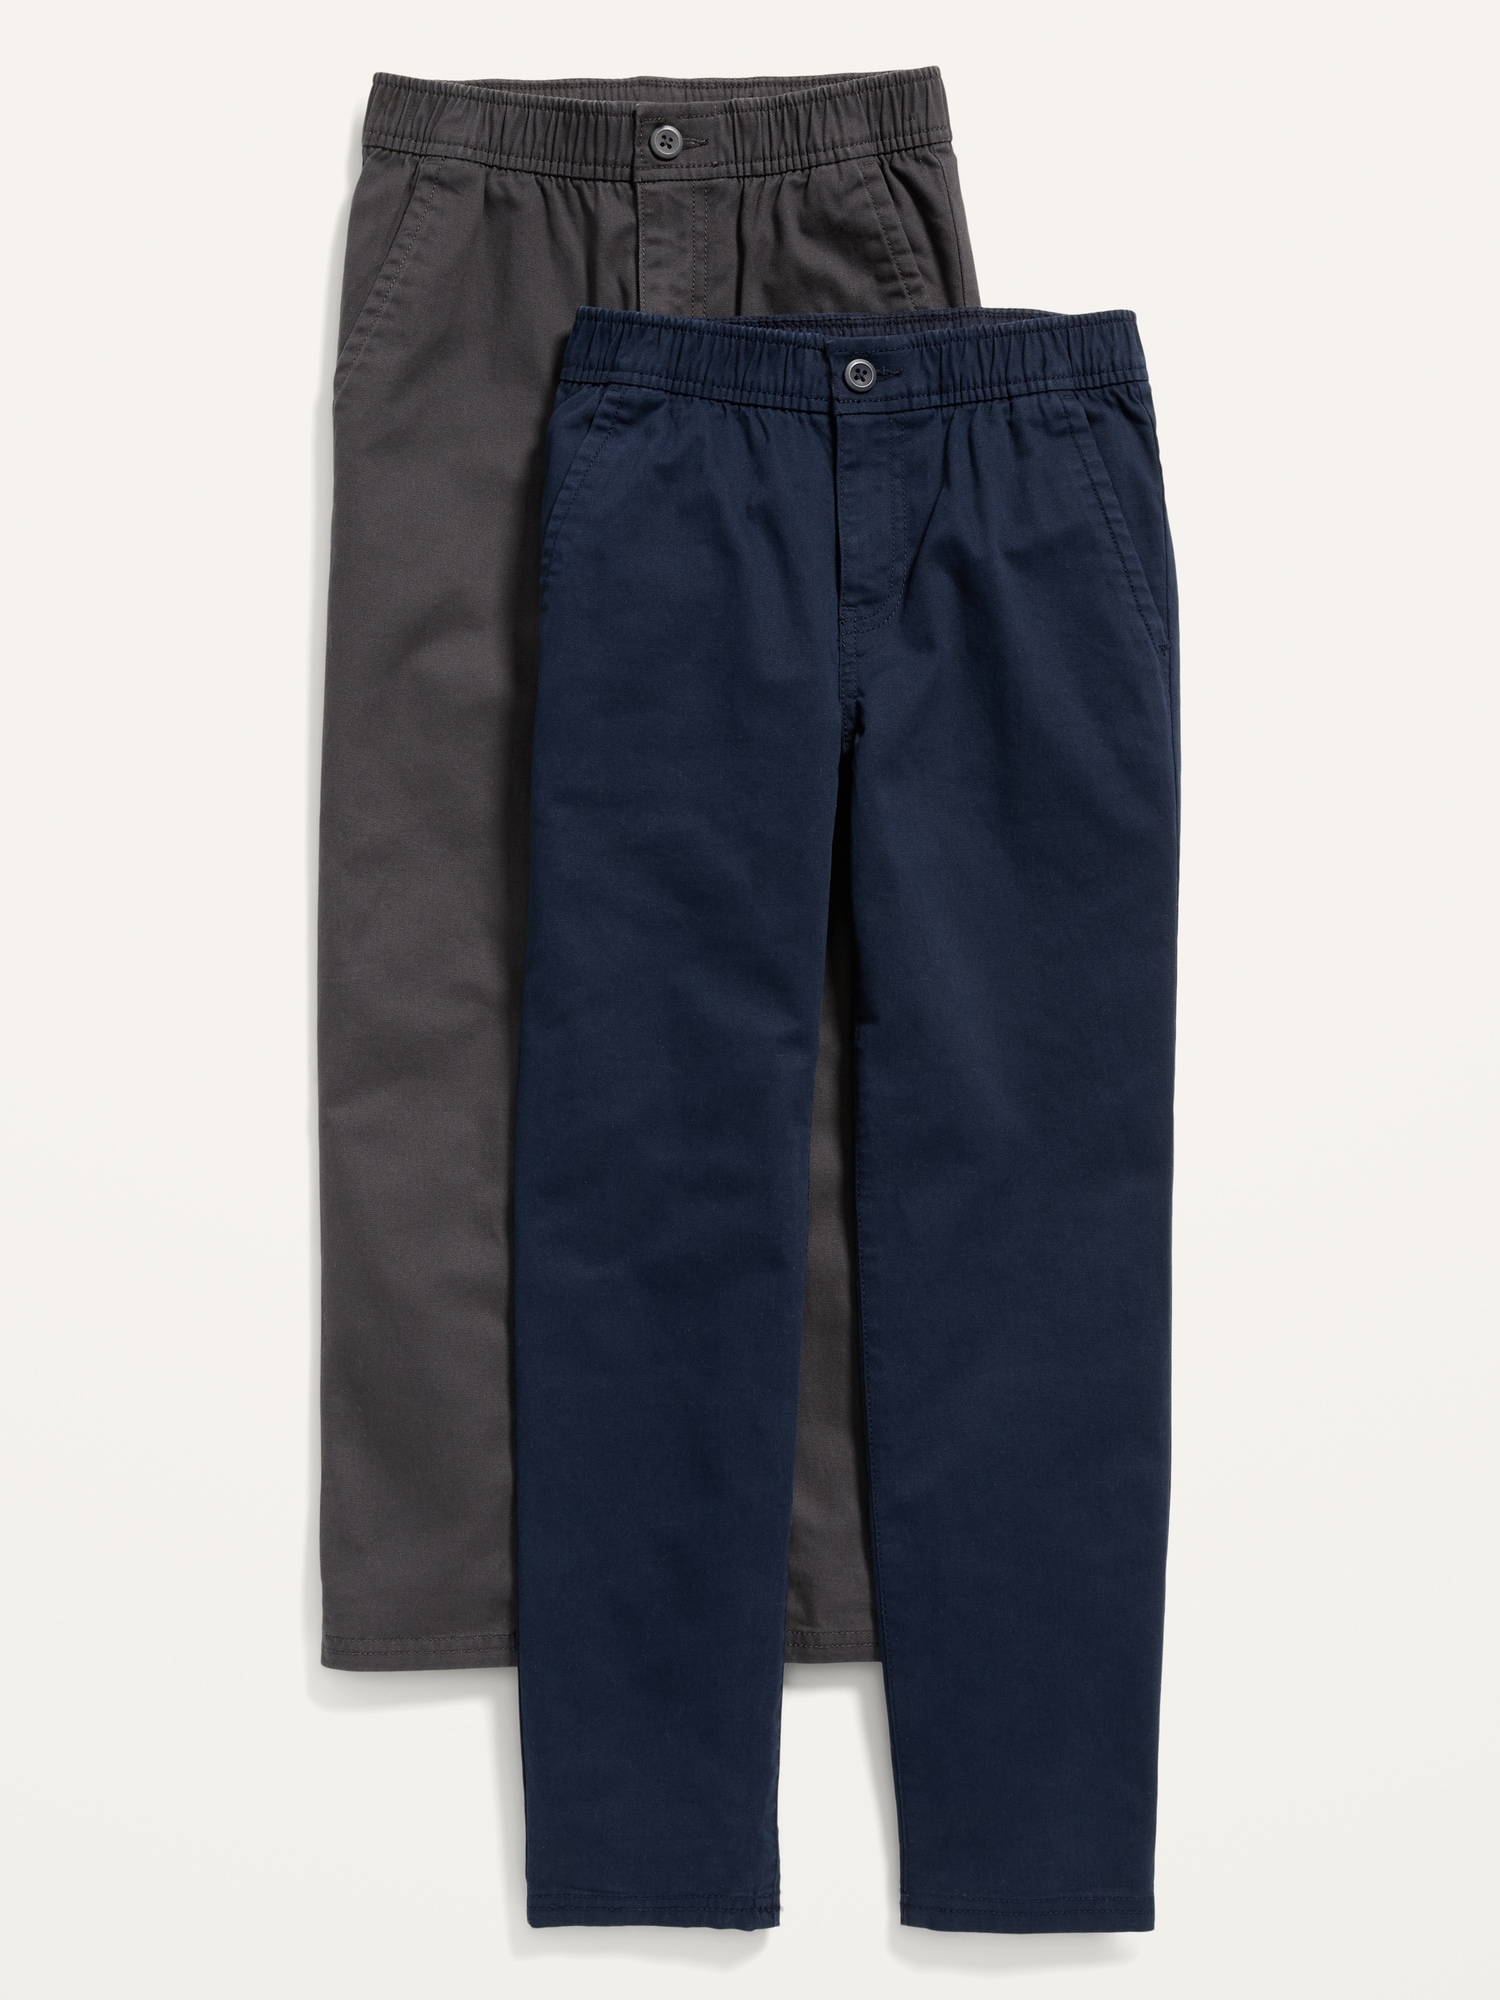 Old Navy OGC Chino Built-In Flex Taper Pants 2-Pack for Boys black. 1